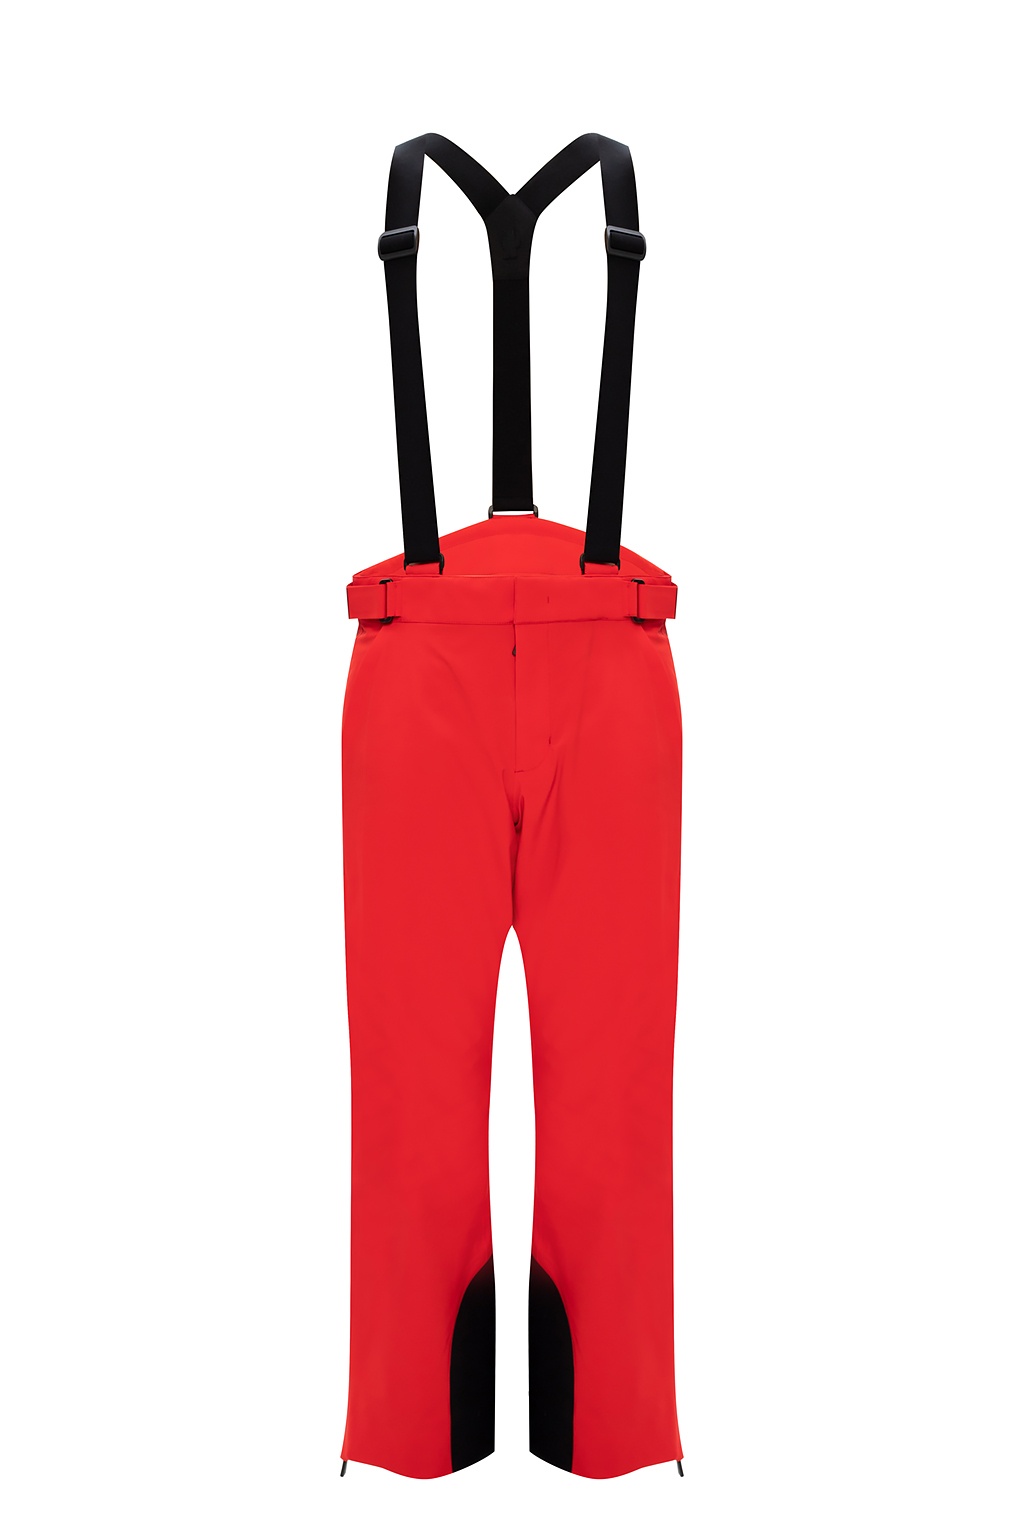 Moncler Grenoble Ski trousers